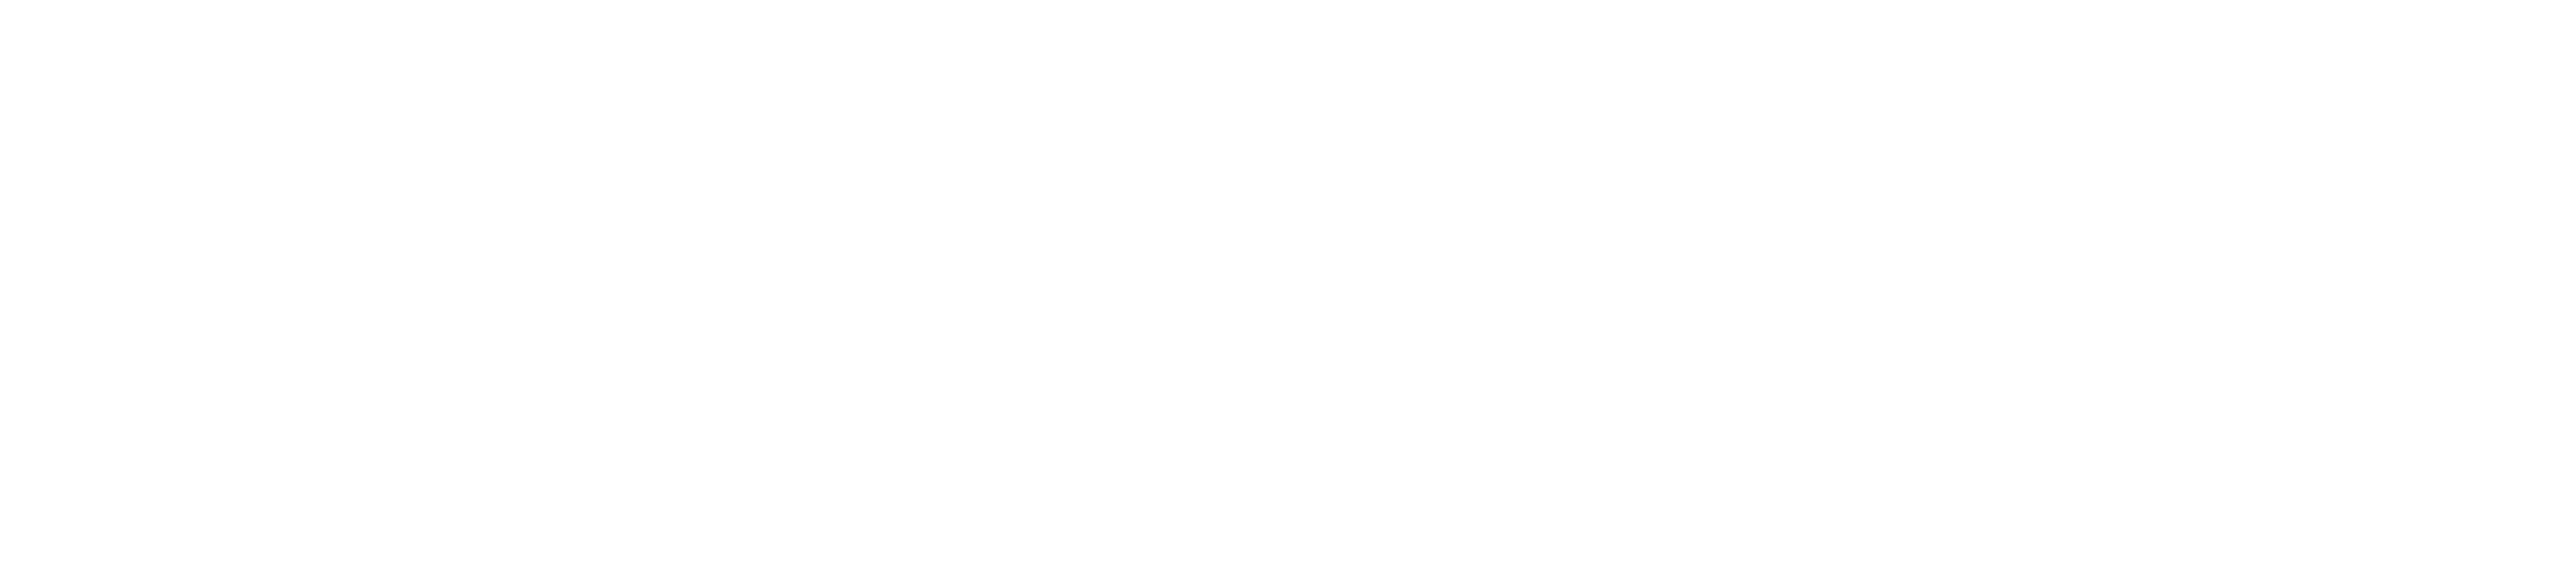 MHMM Property Development Ltd